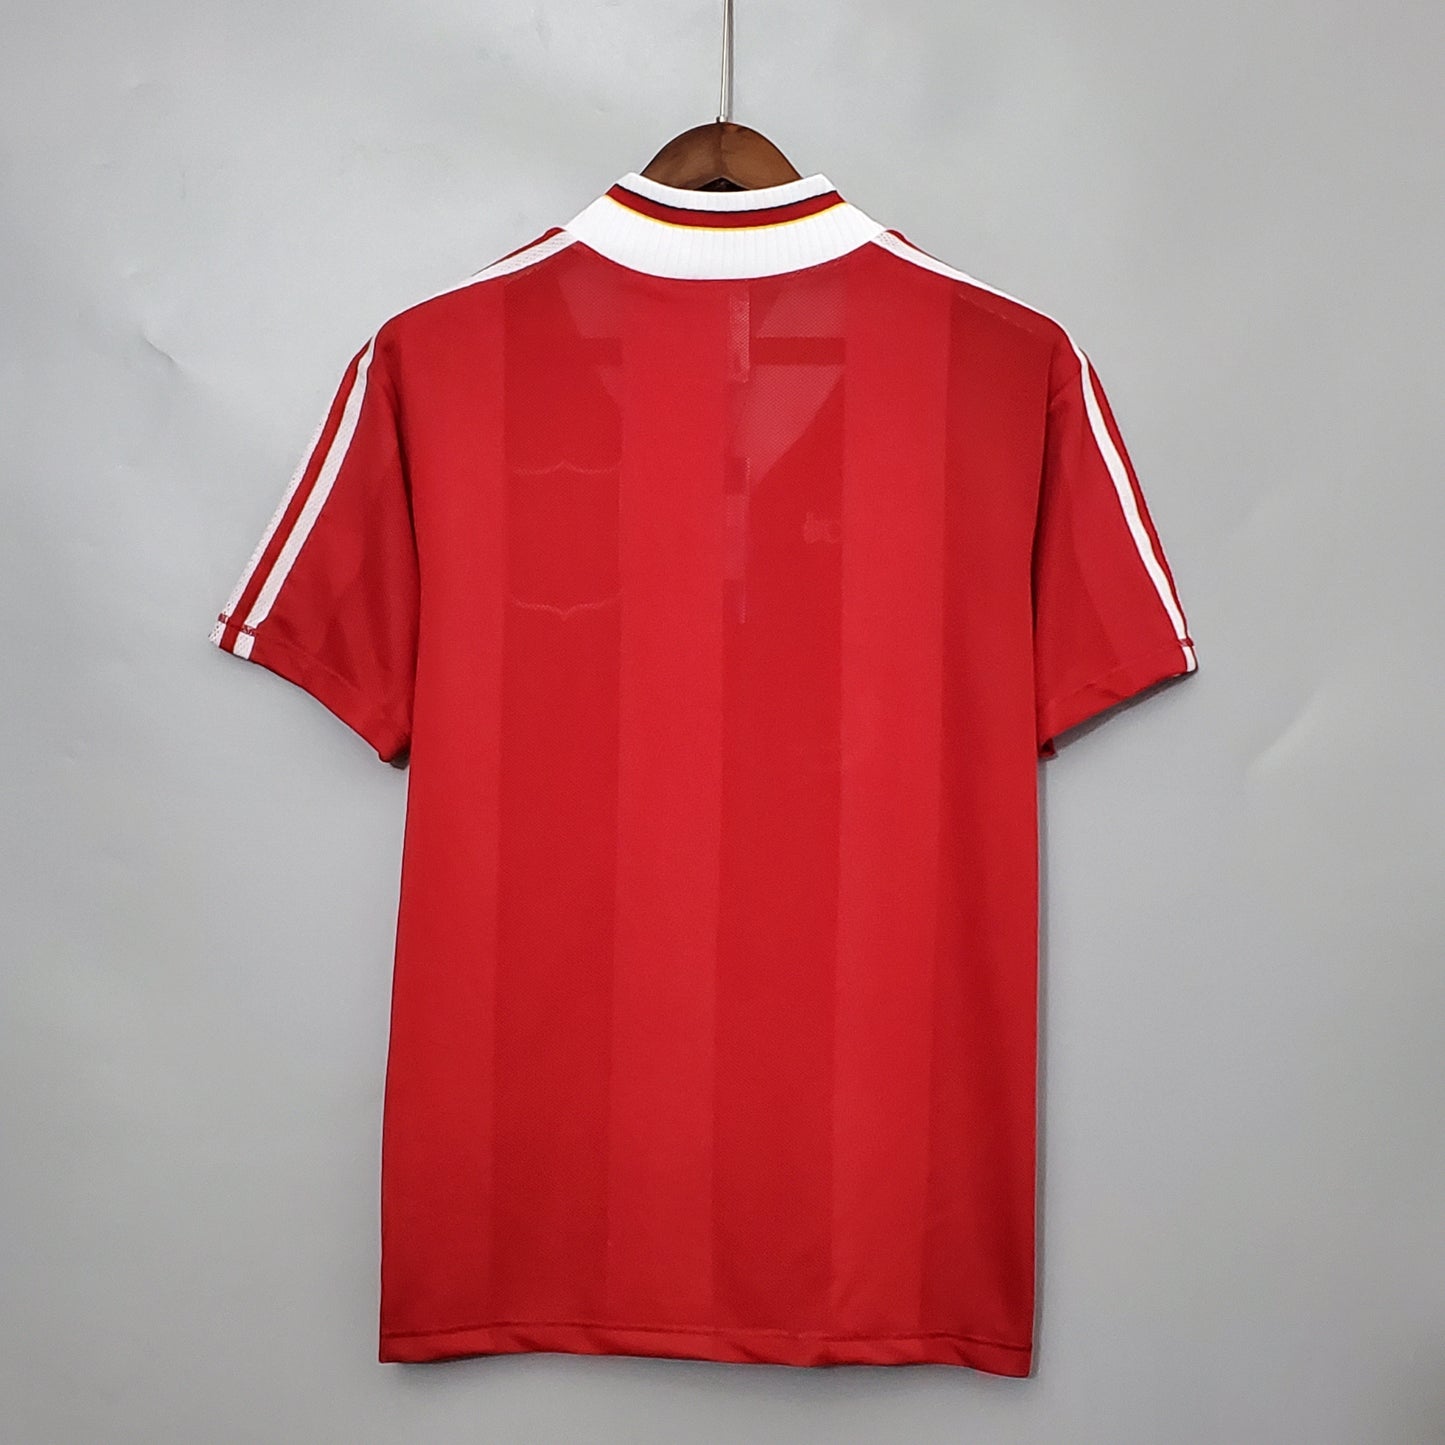 1995/96 Liverpool Home Shirt